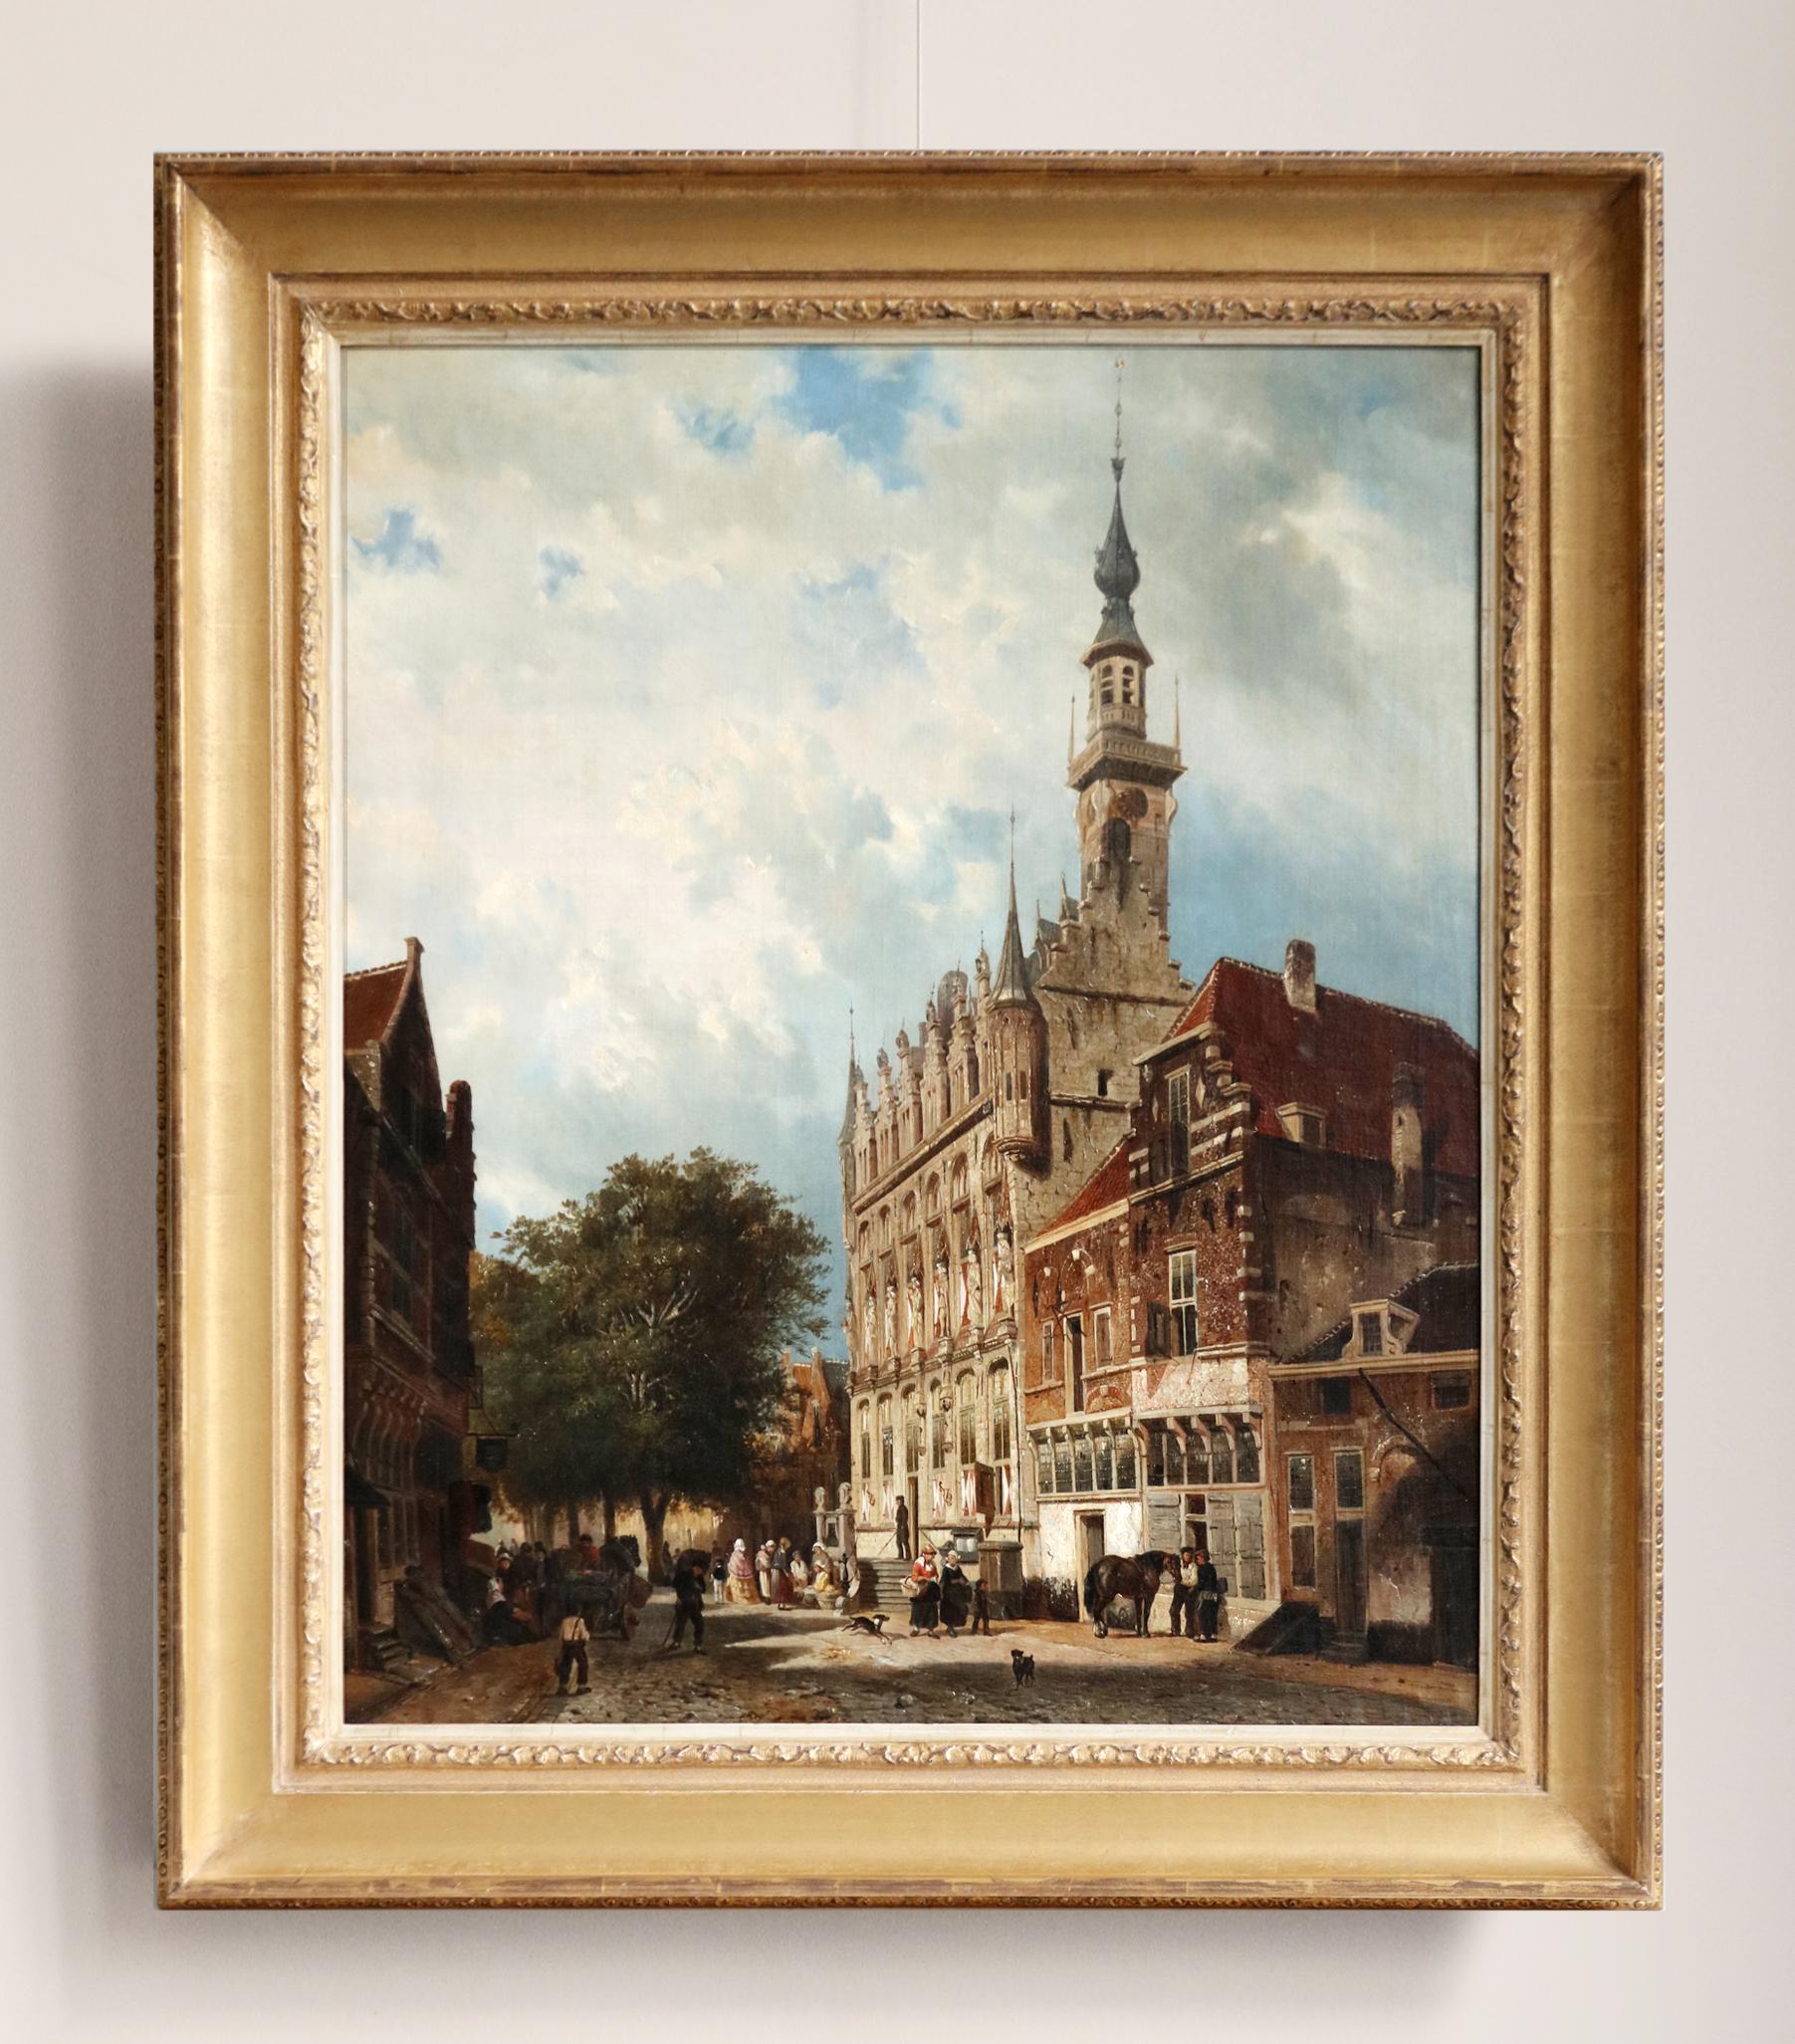 The town hall in Veere - François jean Louis Boulanger (1819-1873) - Romantic Painting by François Boulanger